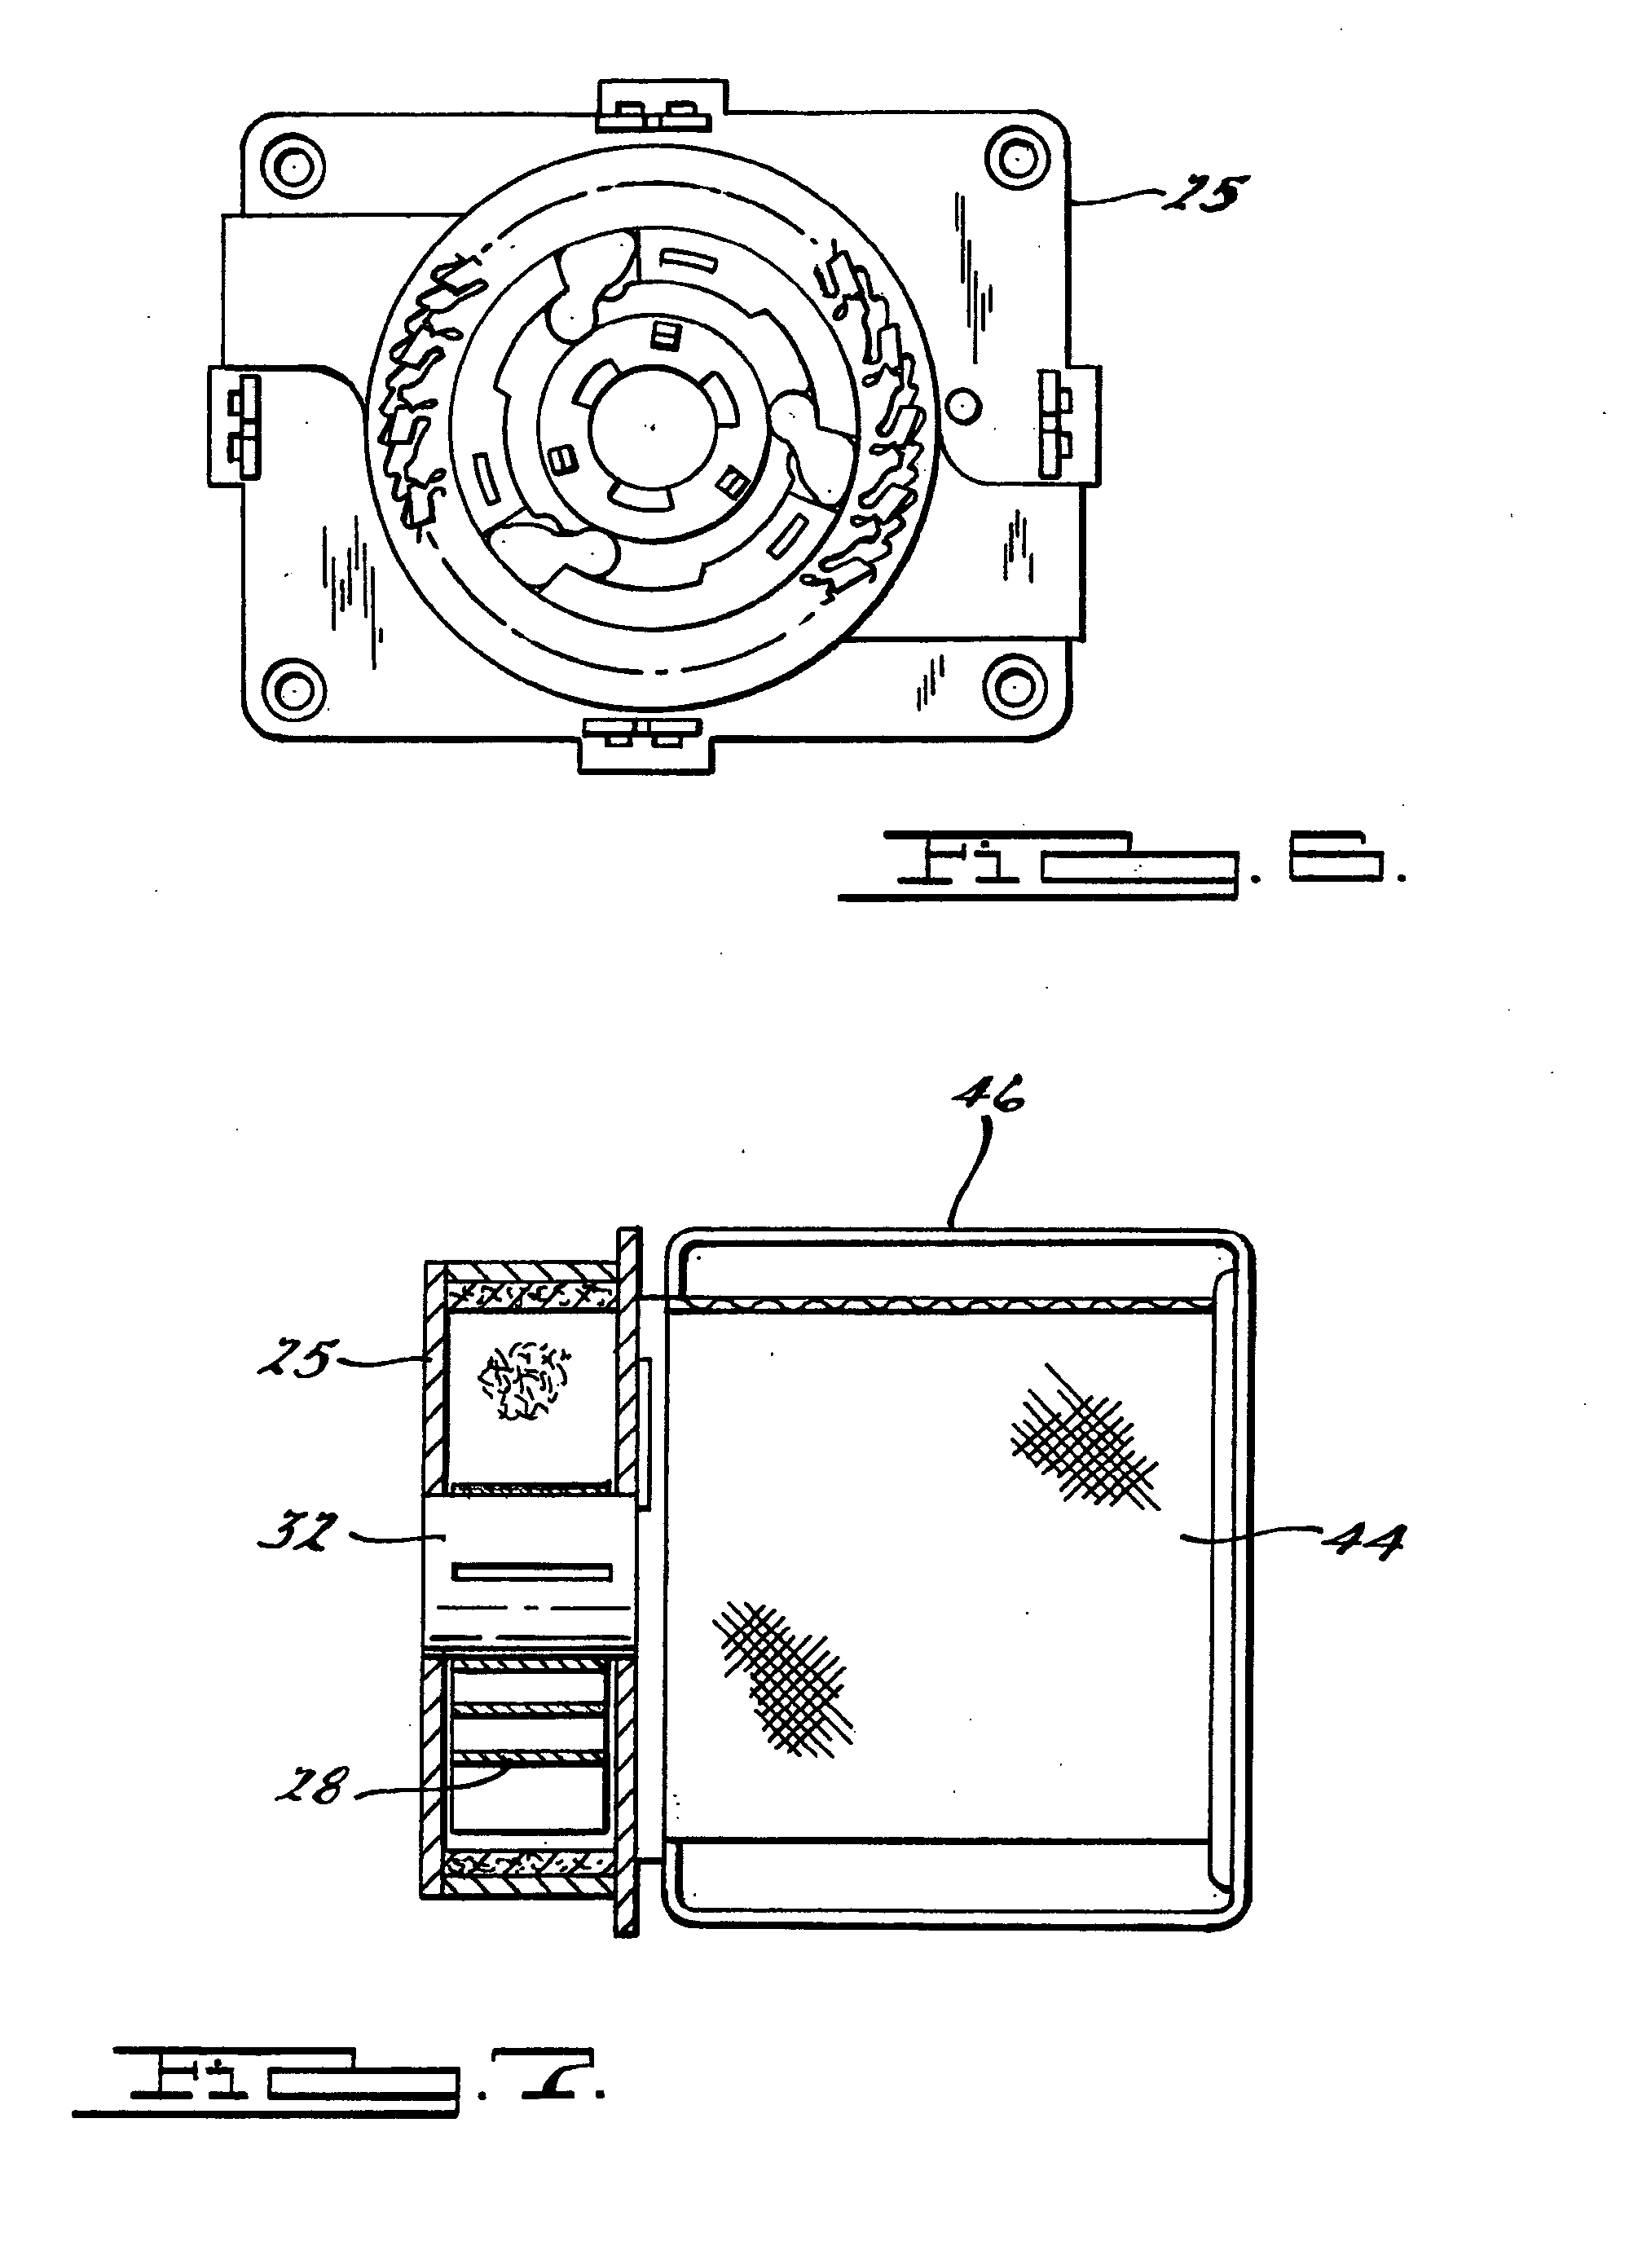 Micro gas generator including an initiator blast shield